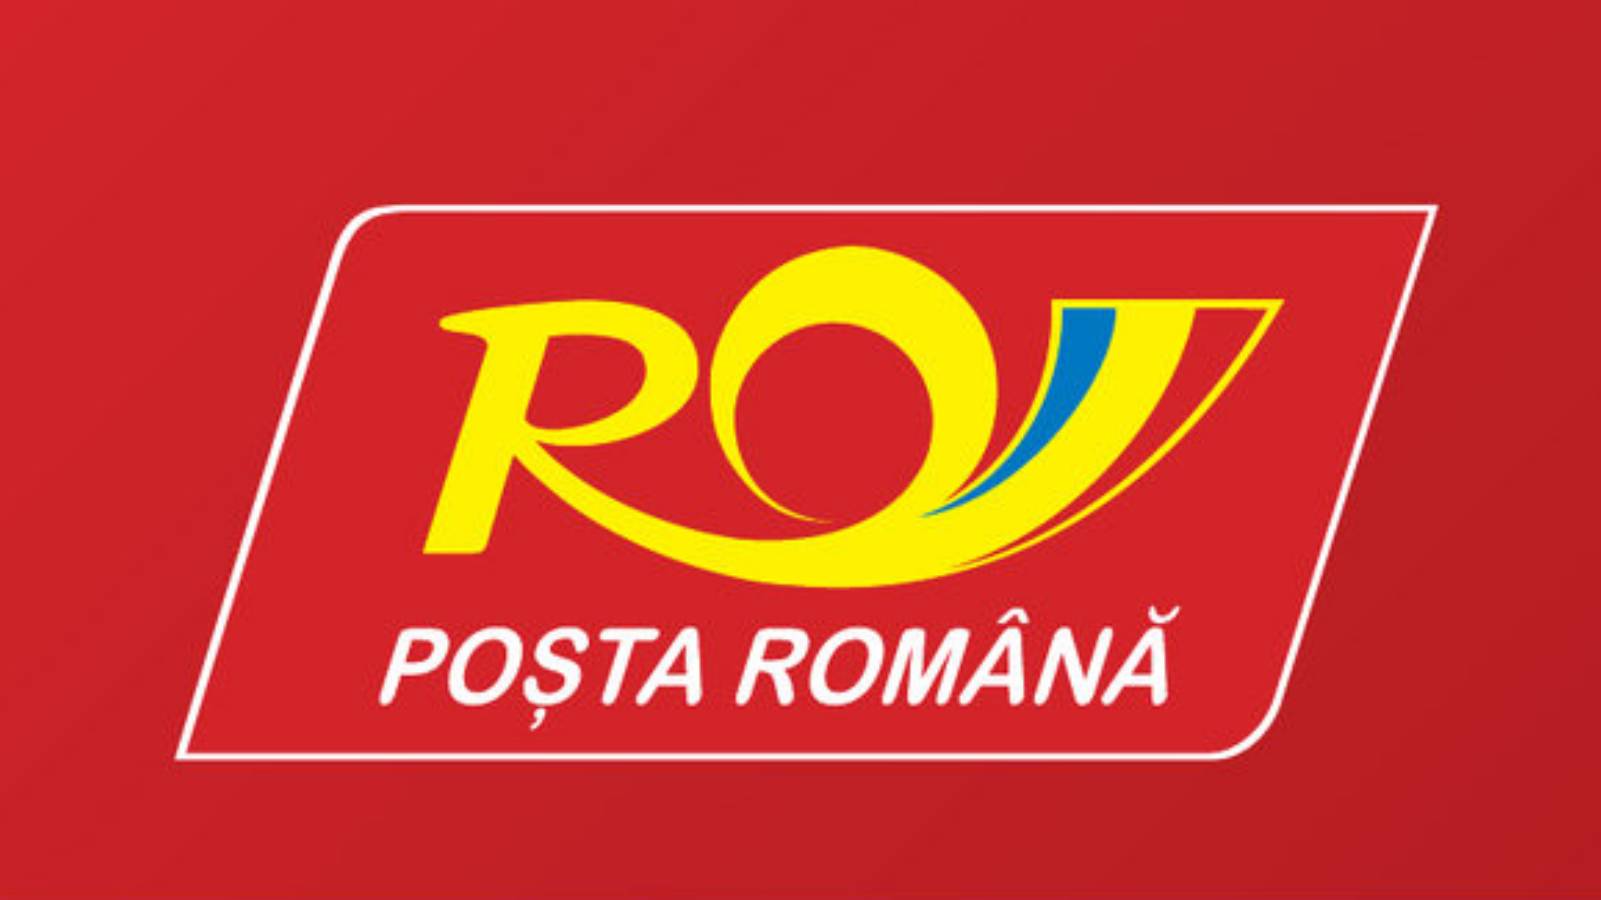 Roemeense poststatus aeo Roemenië